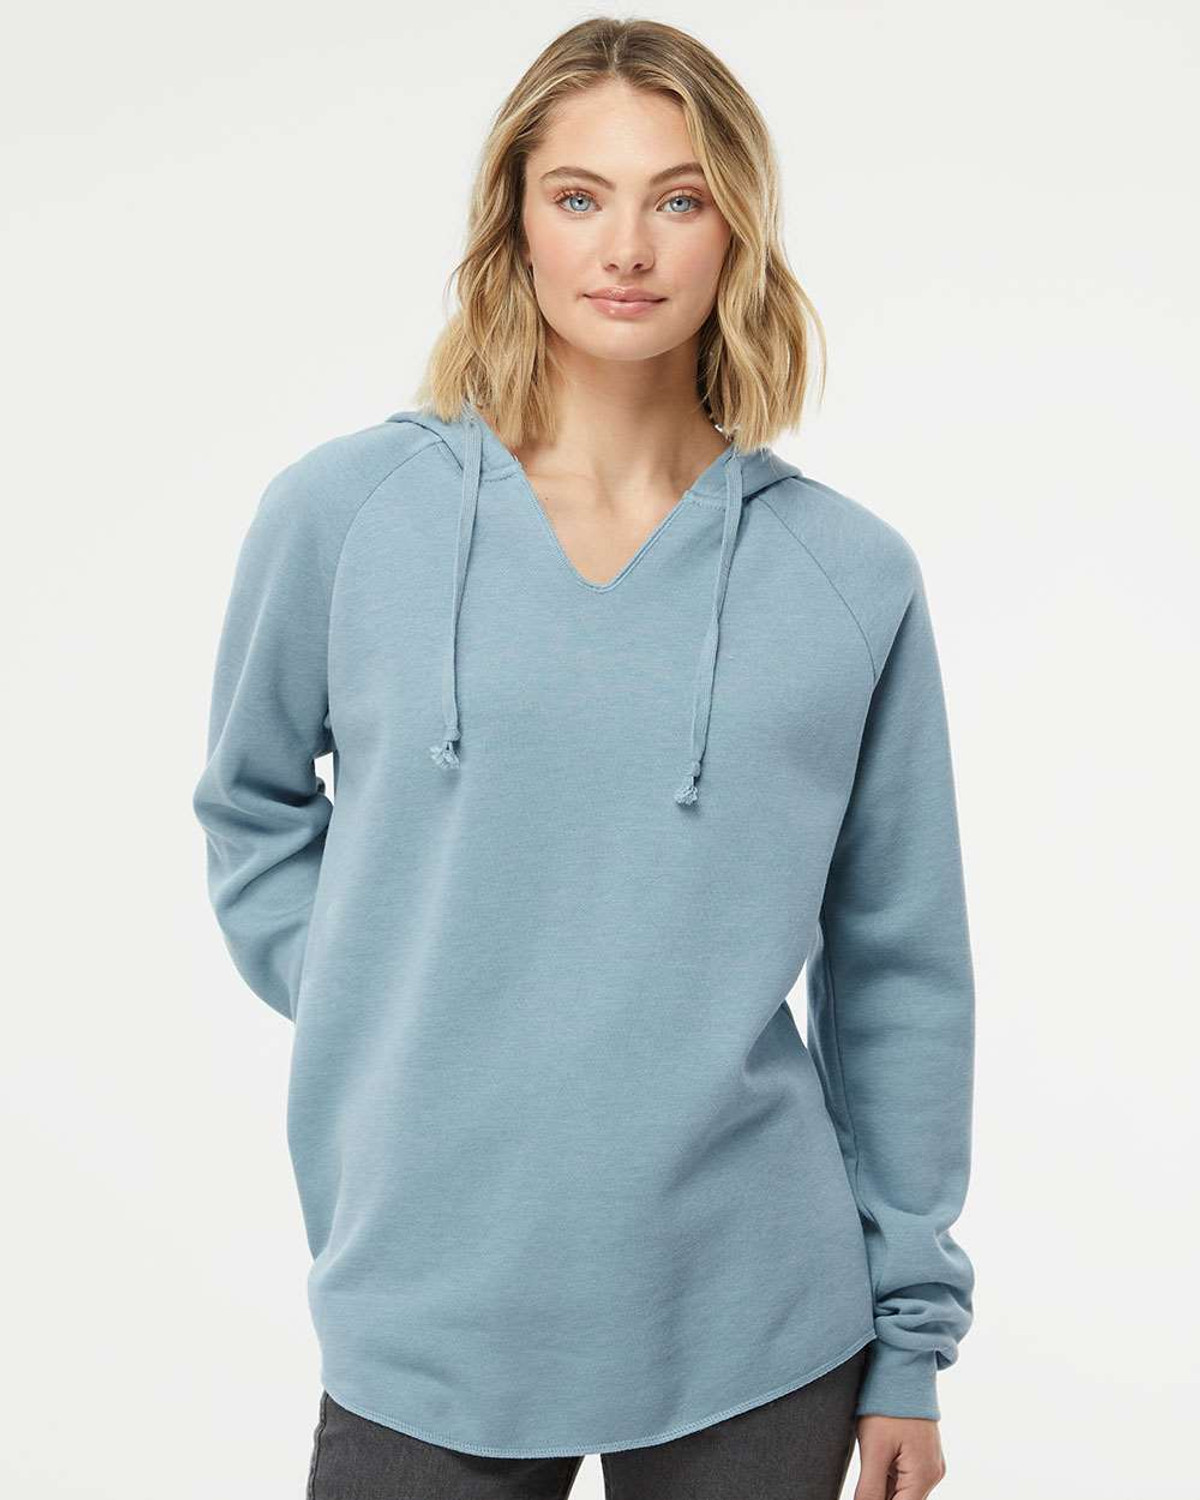 Womens Blue Hoodies & Pullovers.